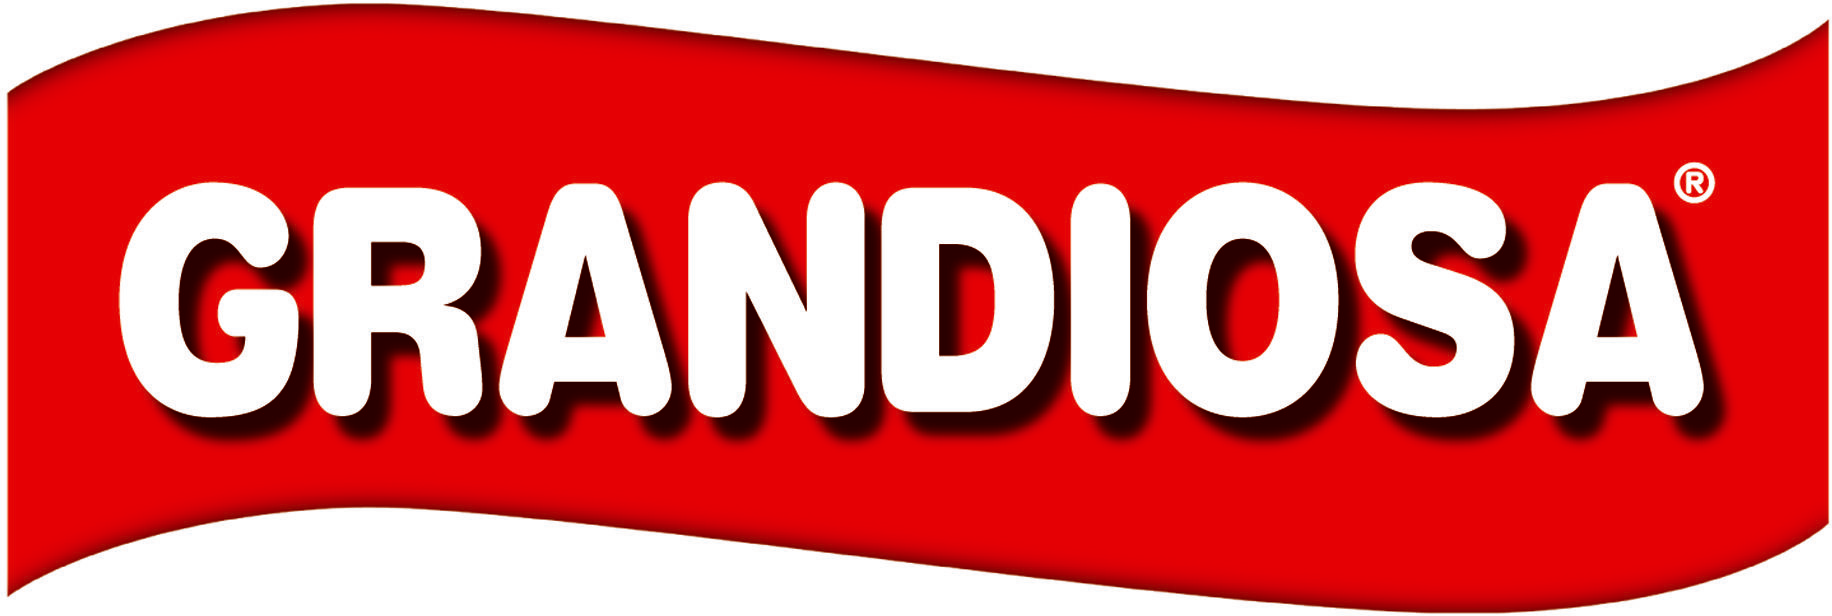 Grandiosa | Logopedia | FANDOM powered by Wikia